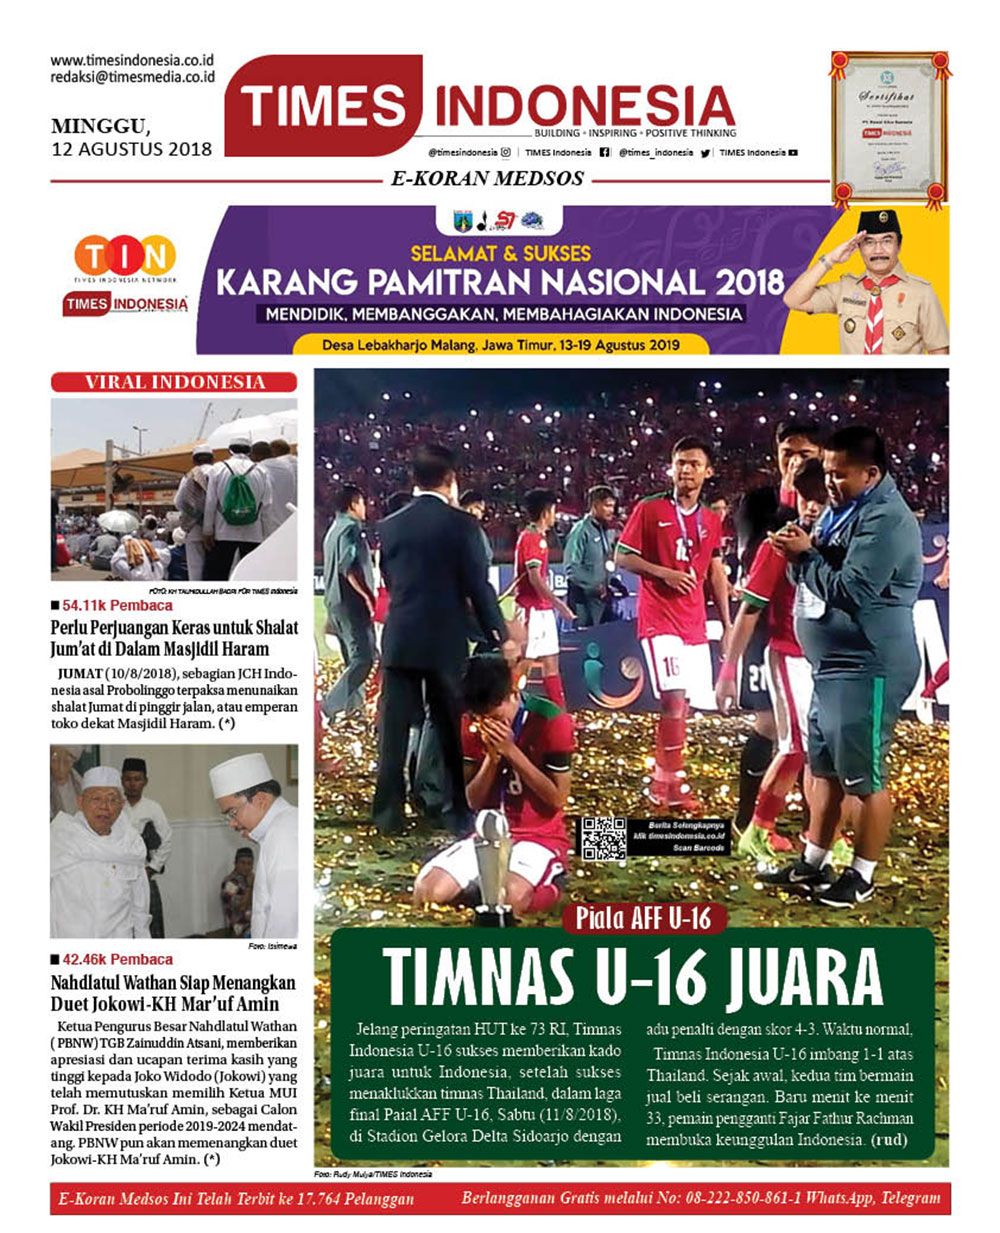 Edisi Minggu 12 Agustus 2018 Times Indonesia